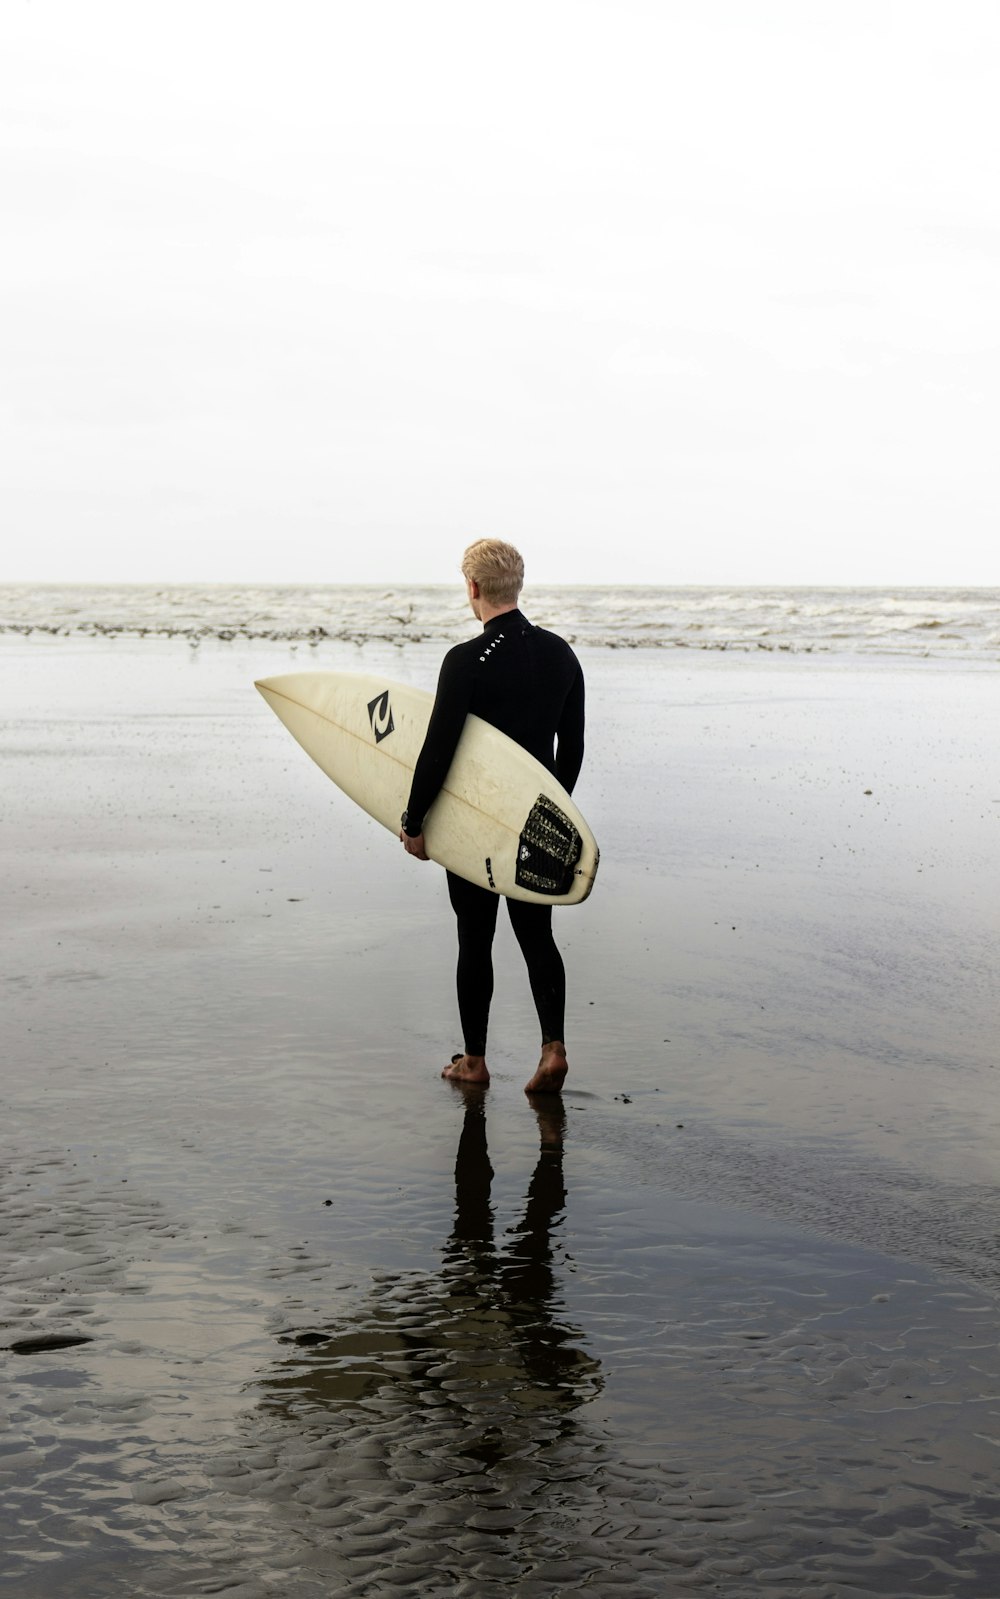 man in black jacket holding white surfboard walking on beach during daytime